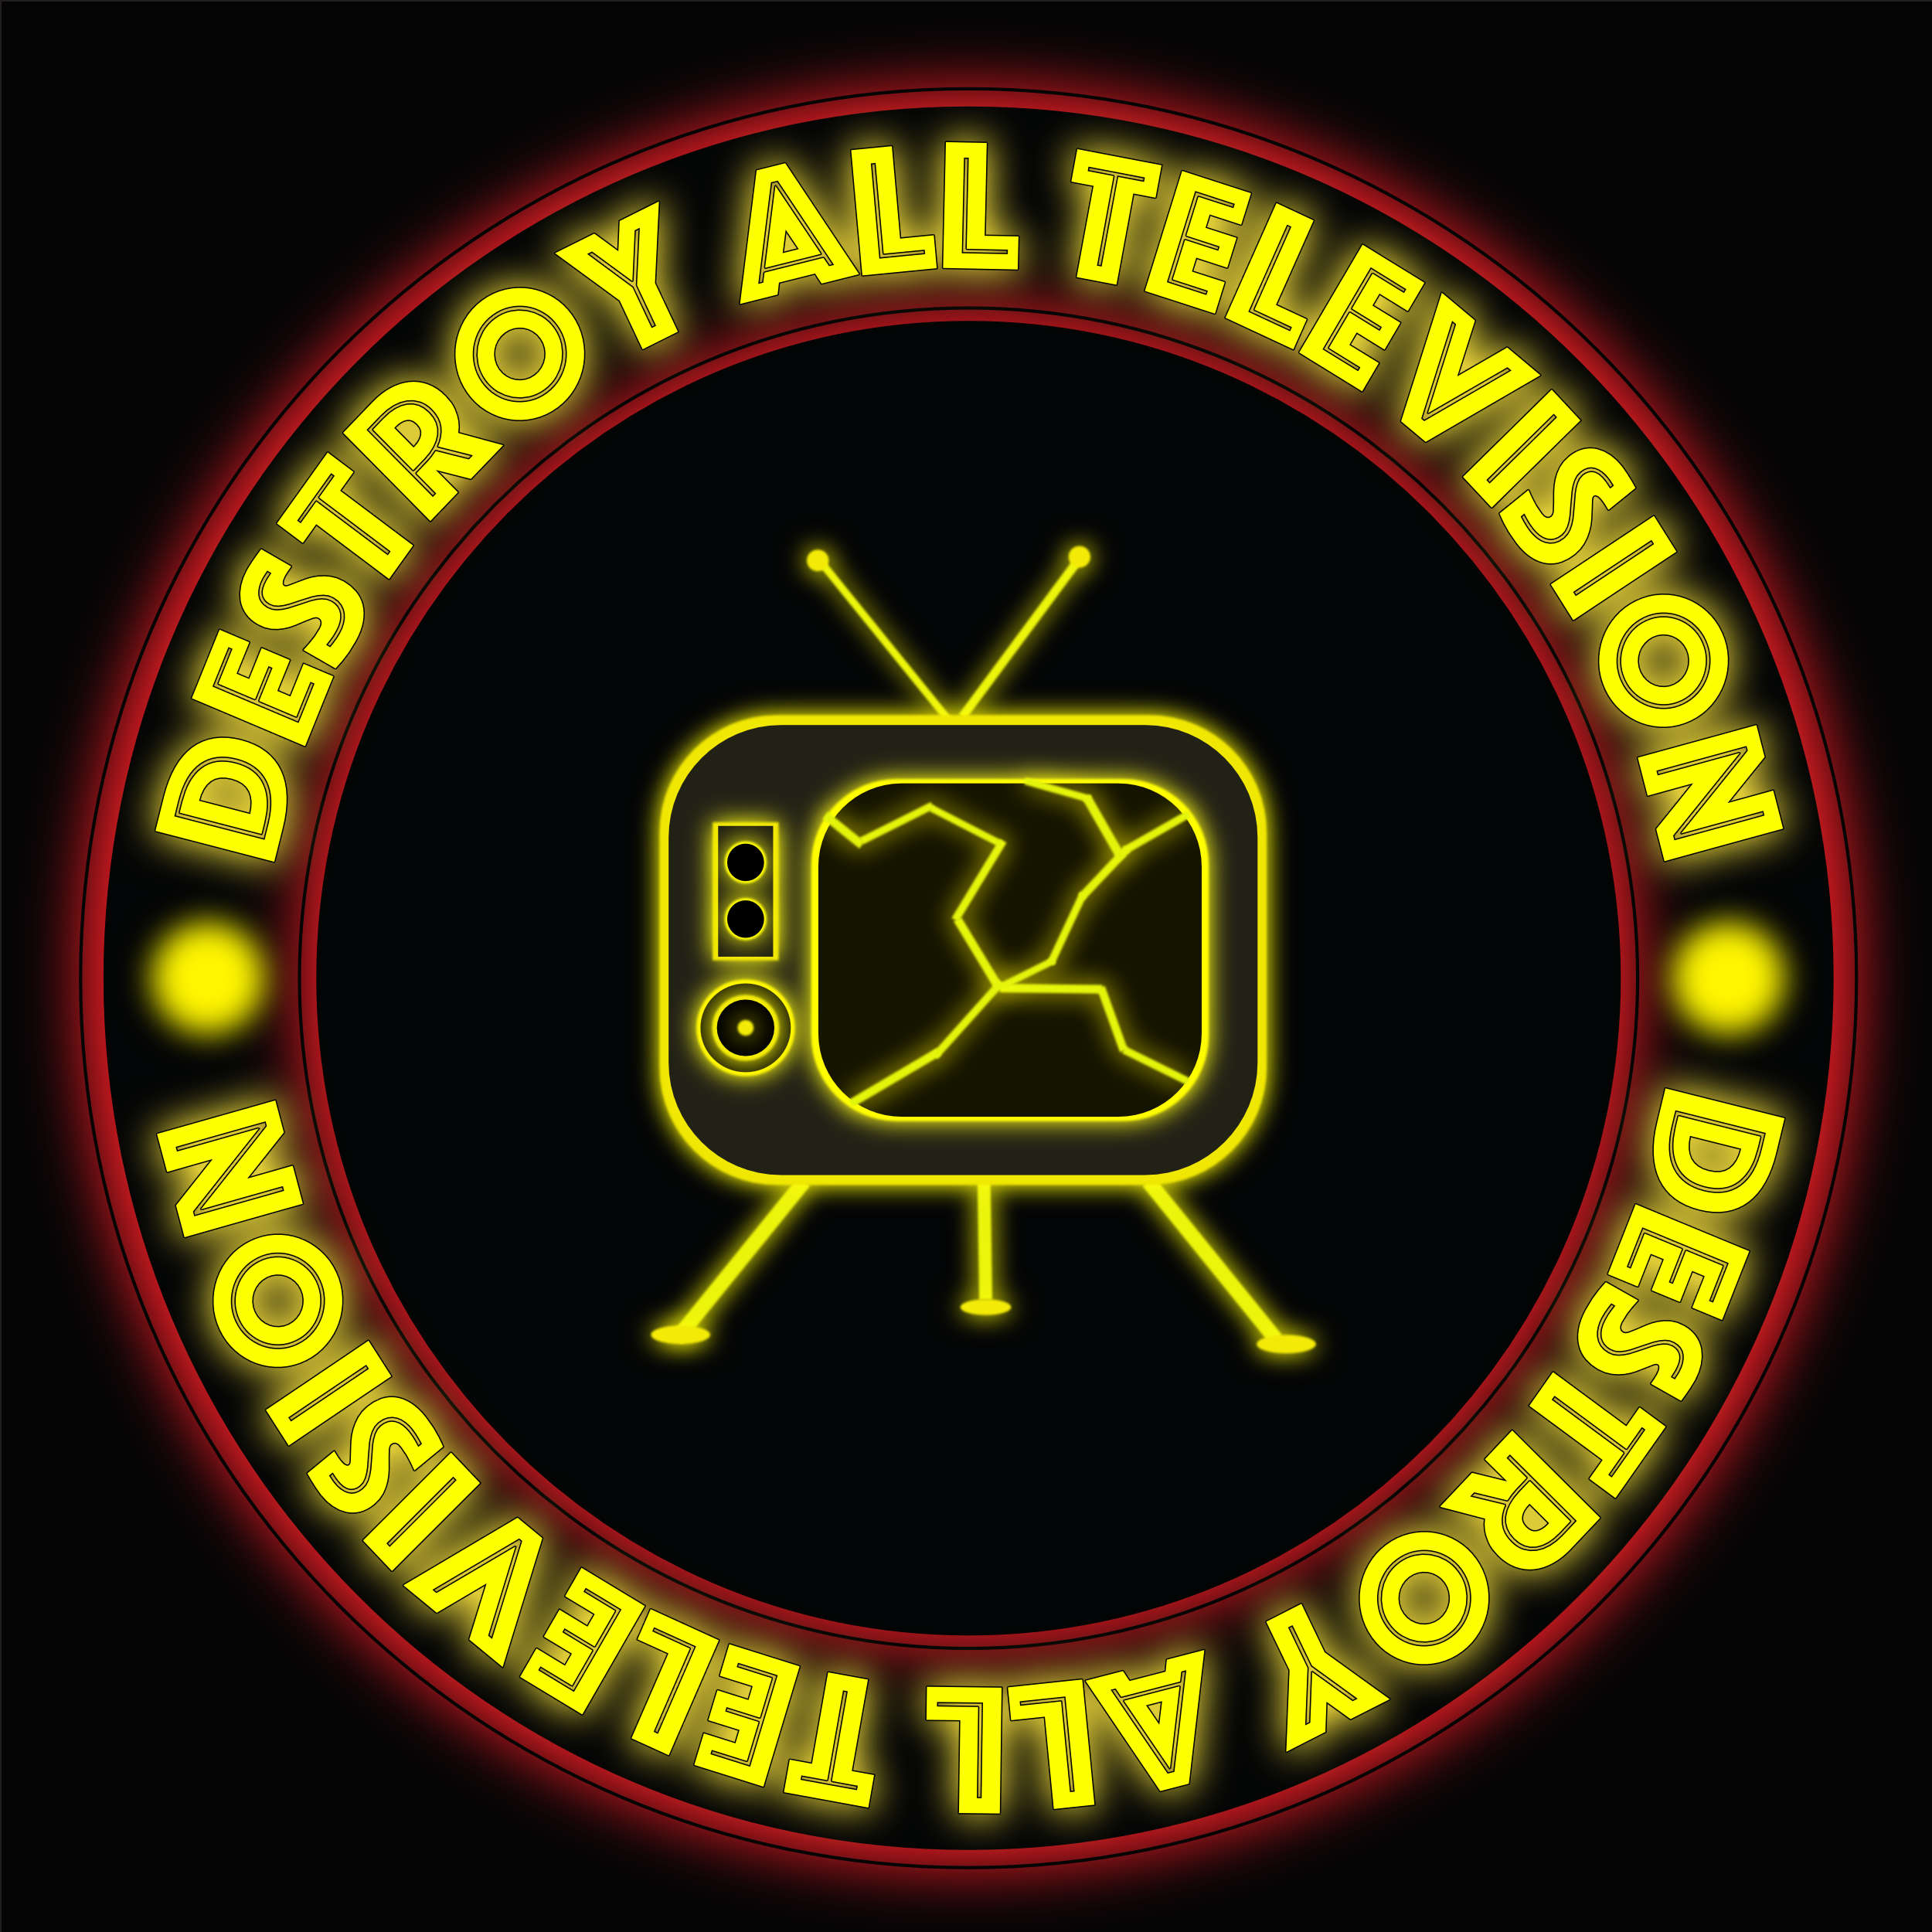 Show artwork for Destroy All Television